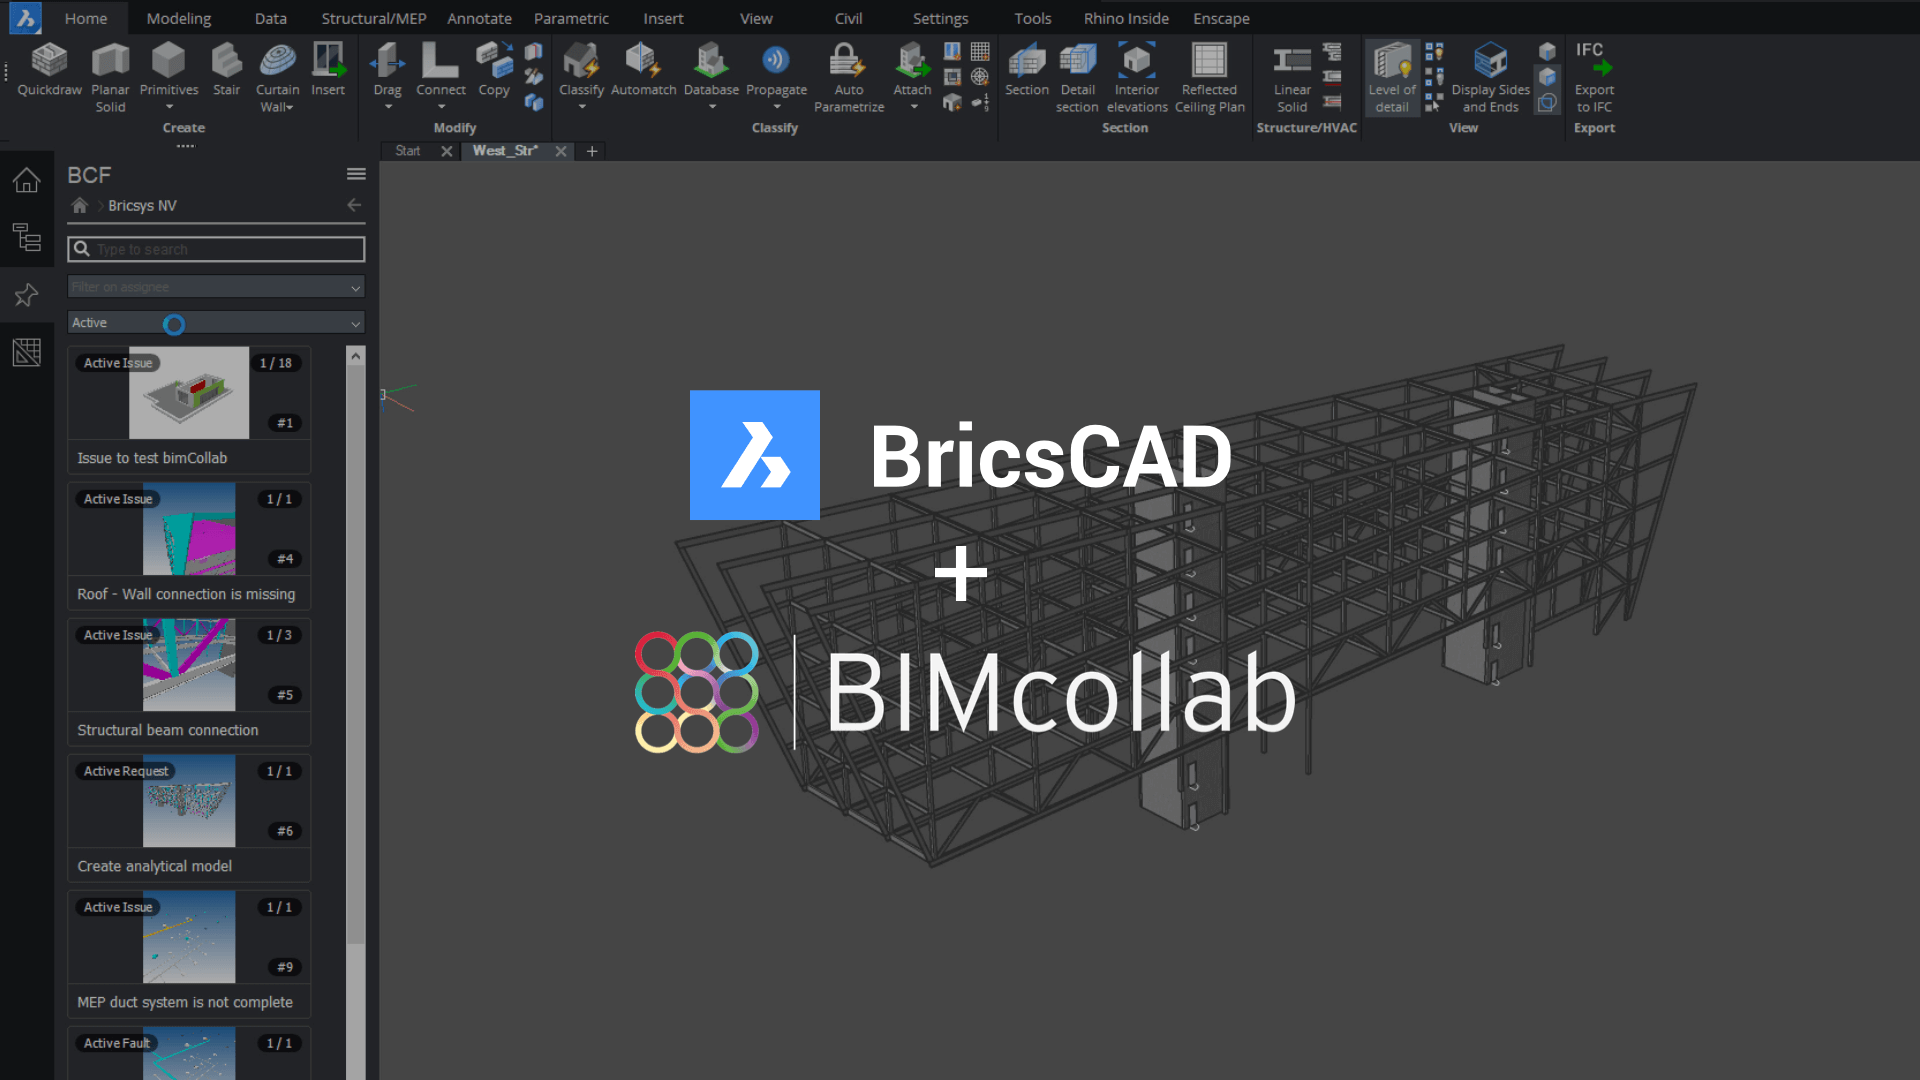 BIMcollab image